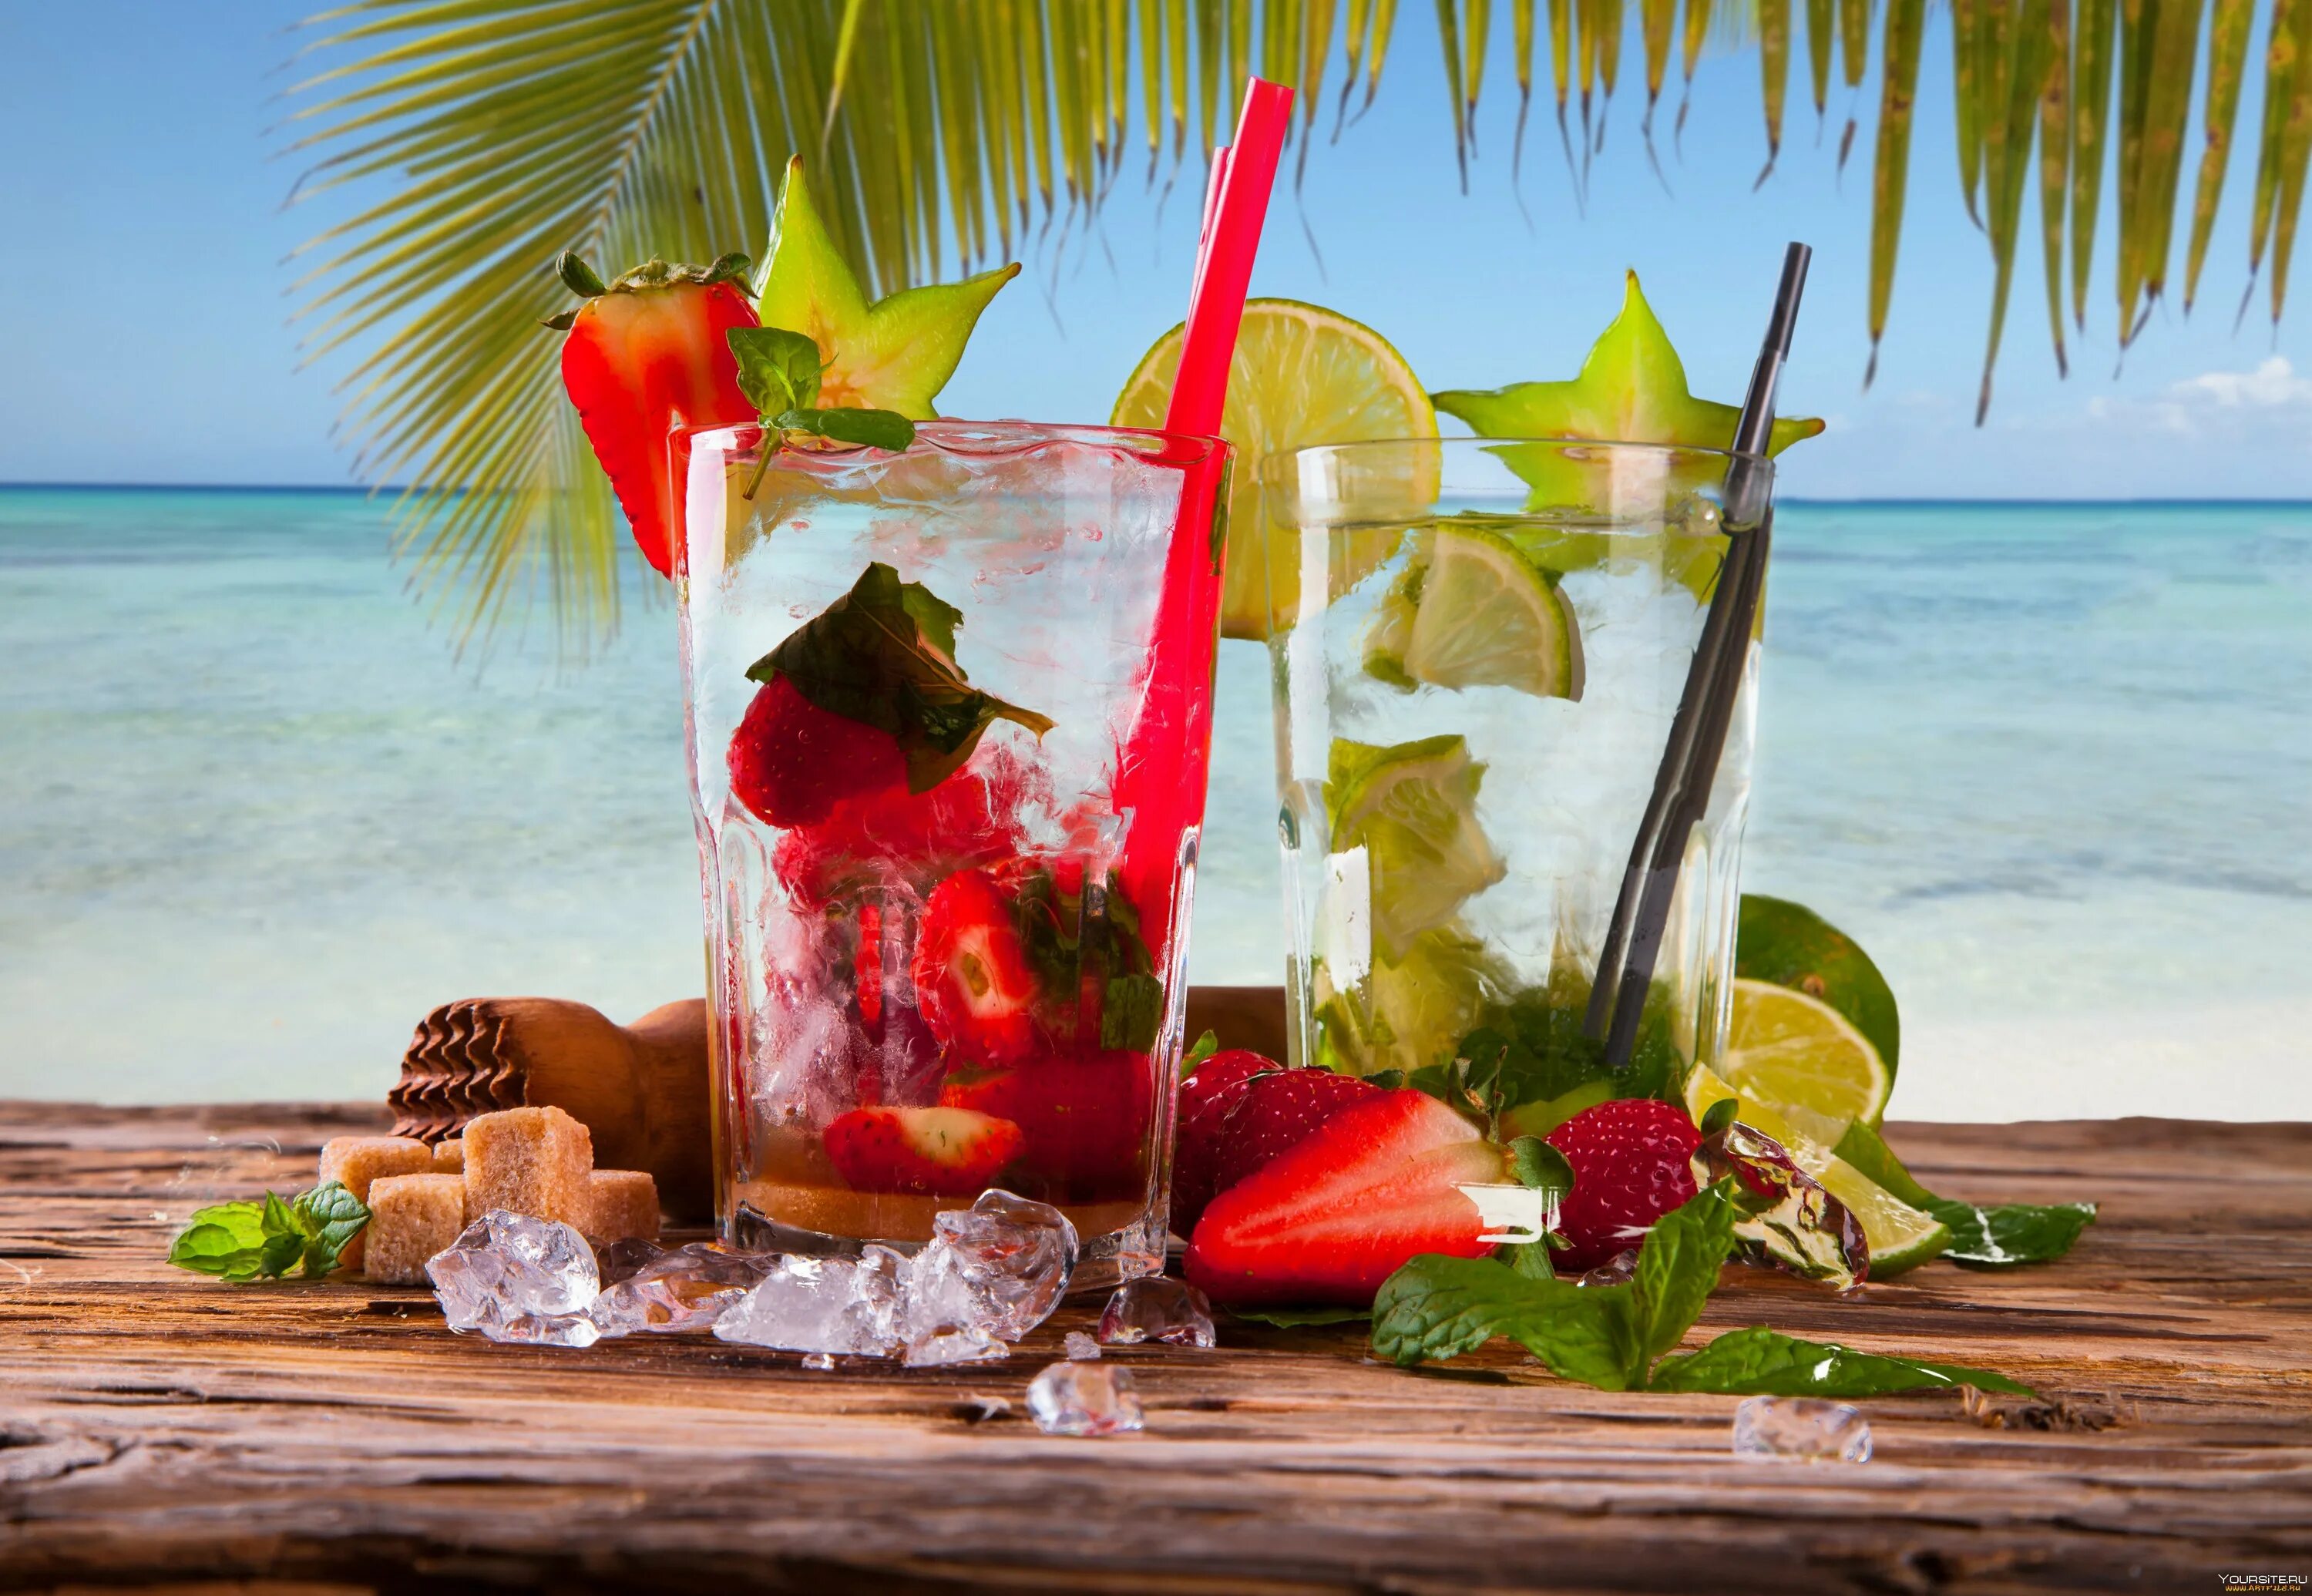 Мохито солнце. Коктейль на пляже. Море фрукты. Летние коктейли. Лето пляж.